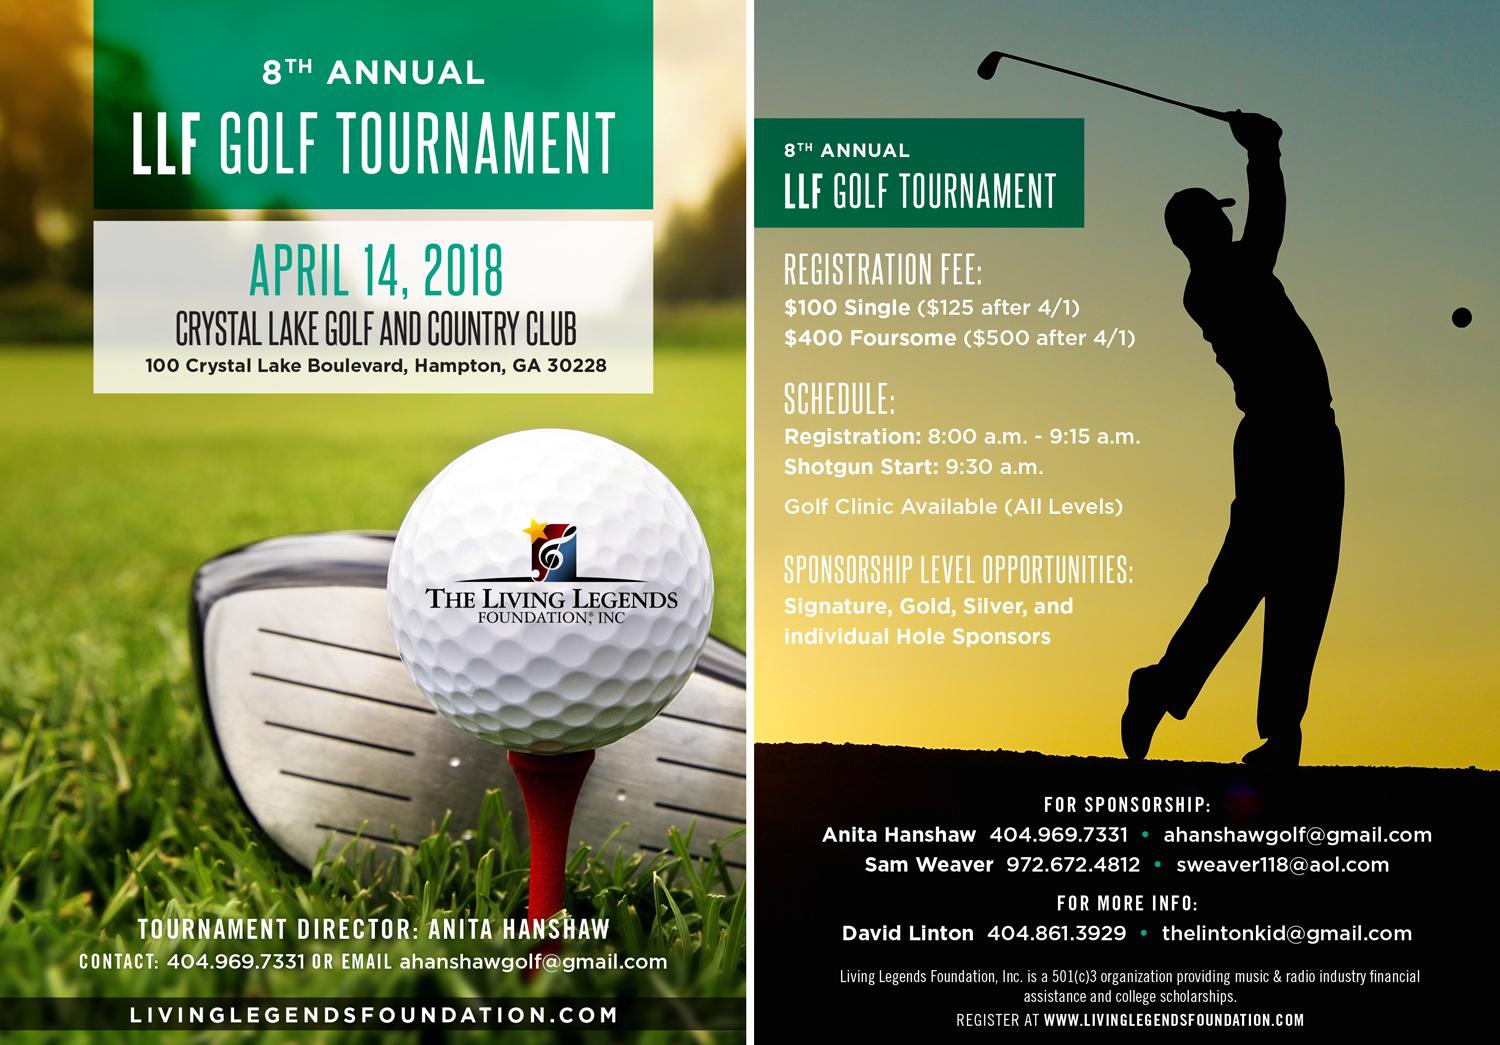 9th Annual Living Legends Foundation A.D. Washington Scholarship Golf Tournament